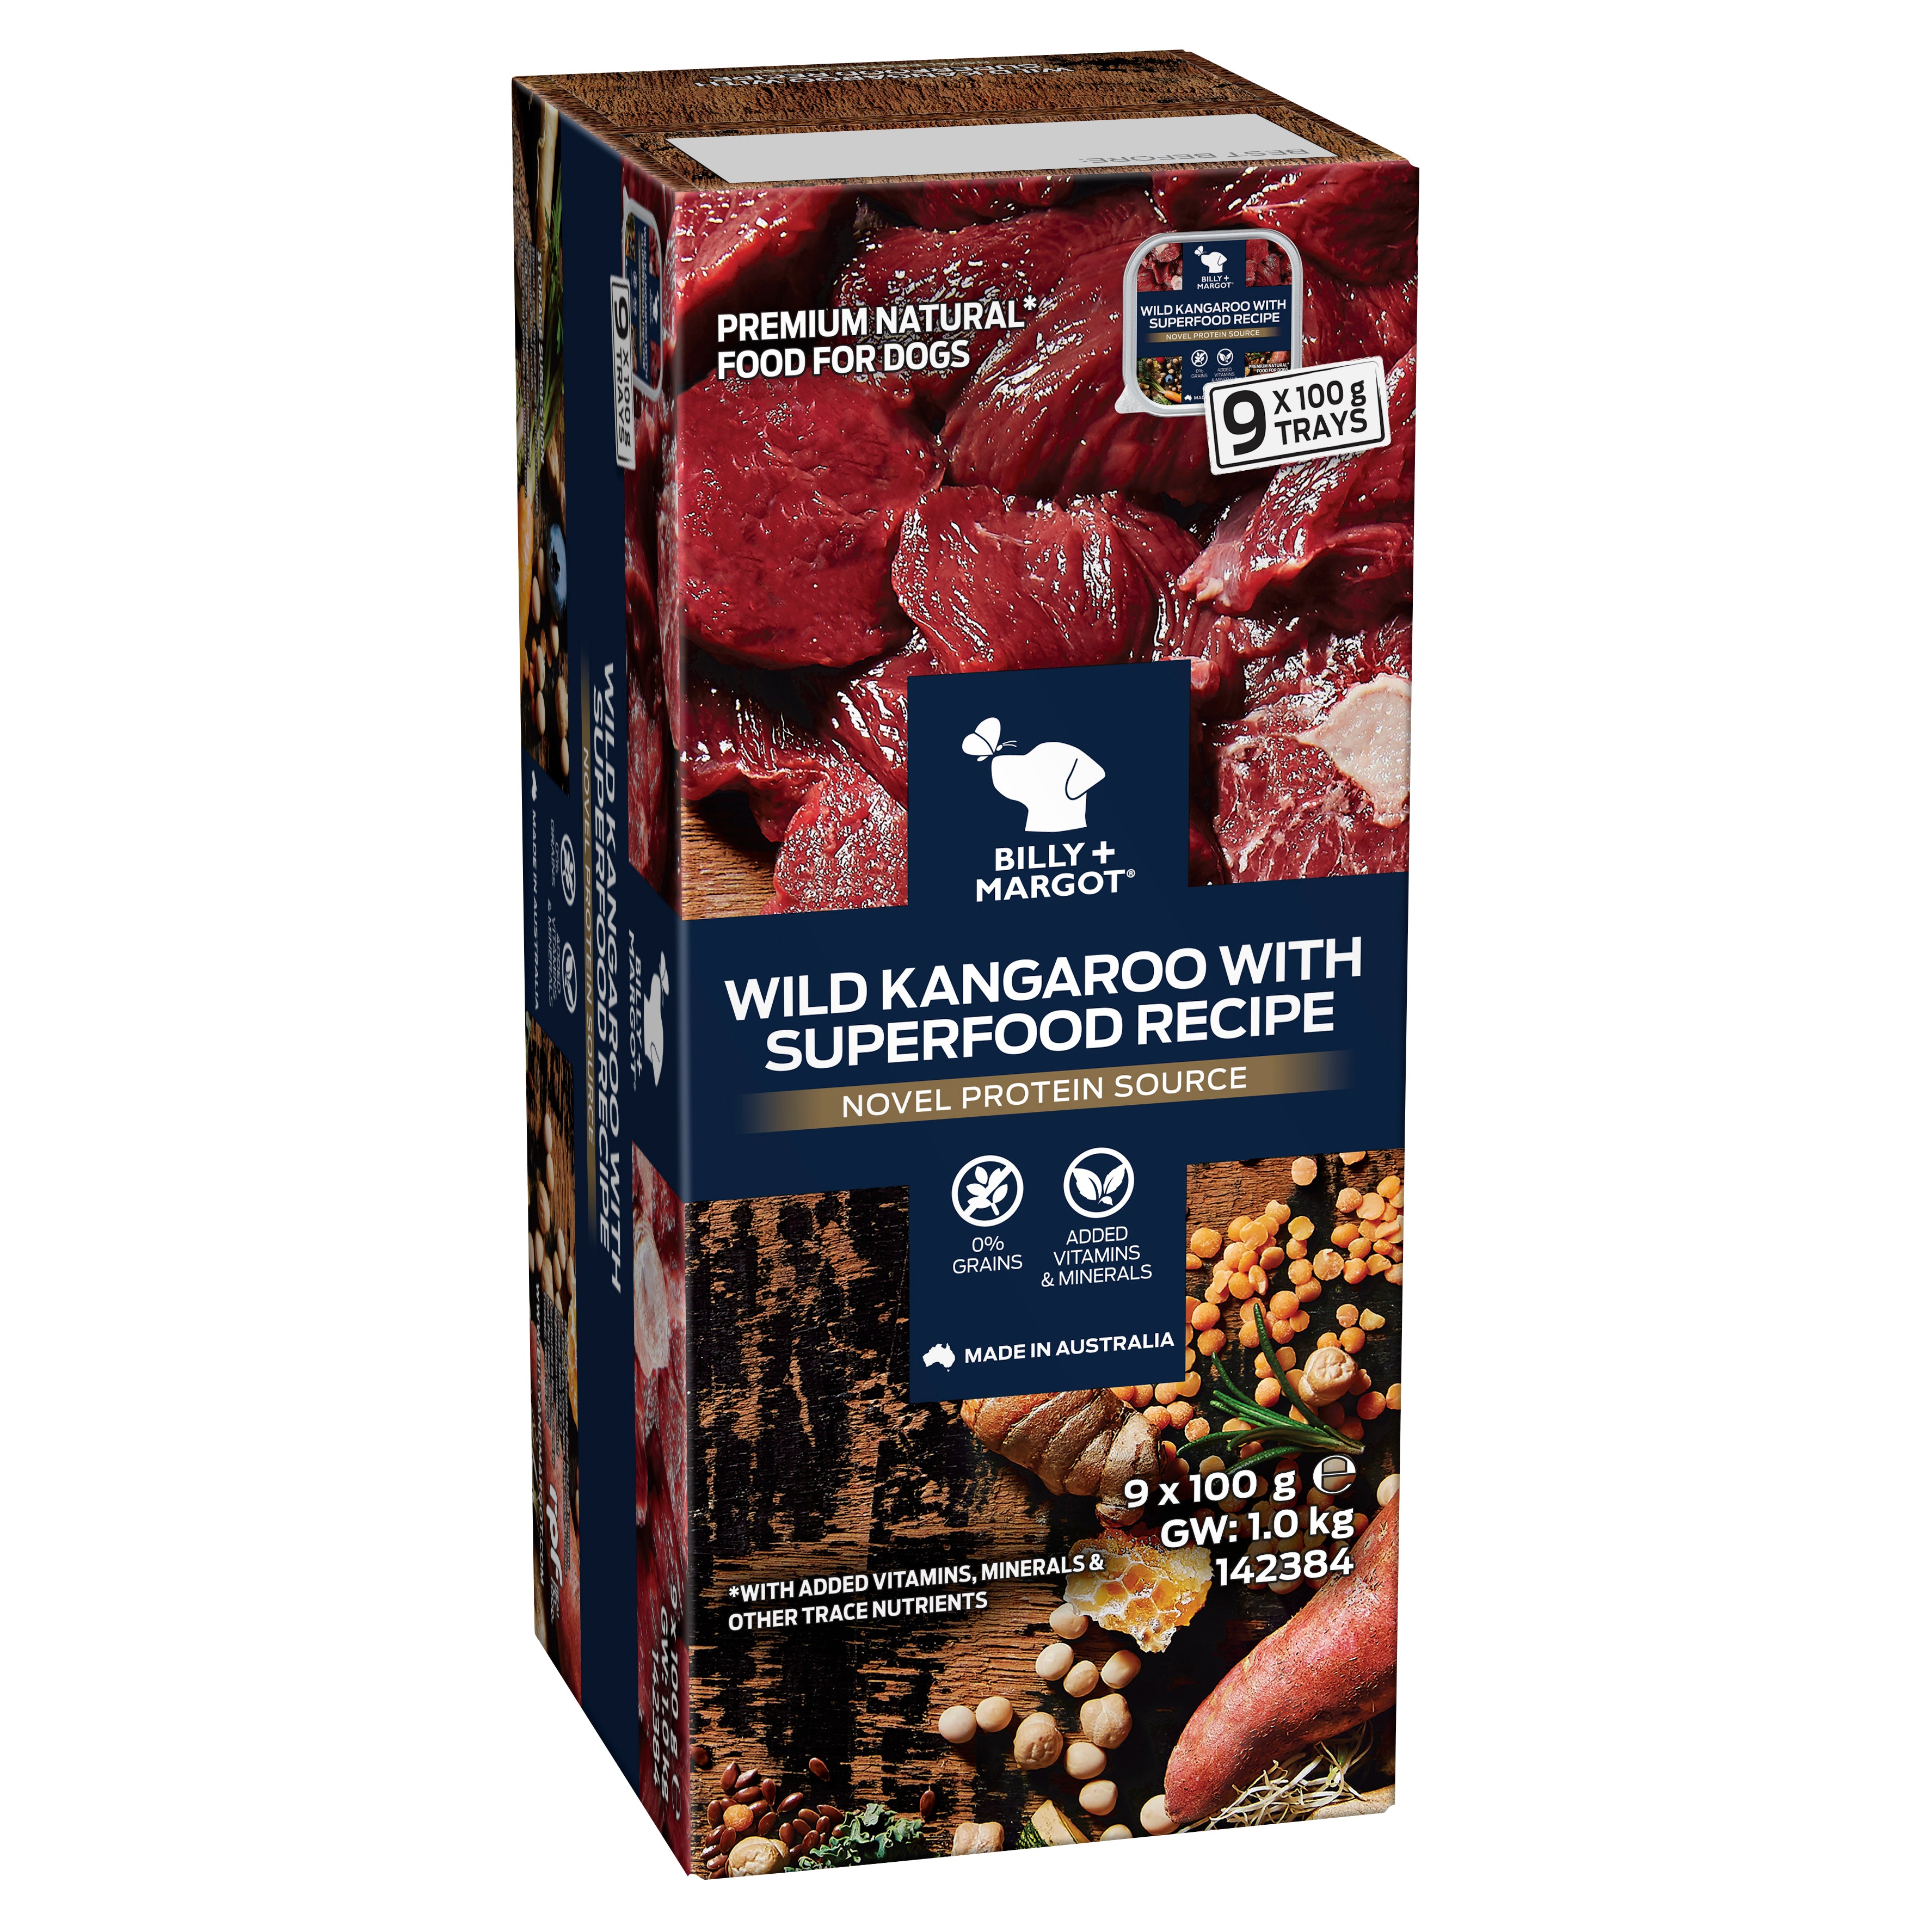 Billy + Margot Wild Kangaroo With Superfood Recipe Wet Dog Food - 9x100g Trays